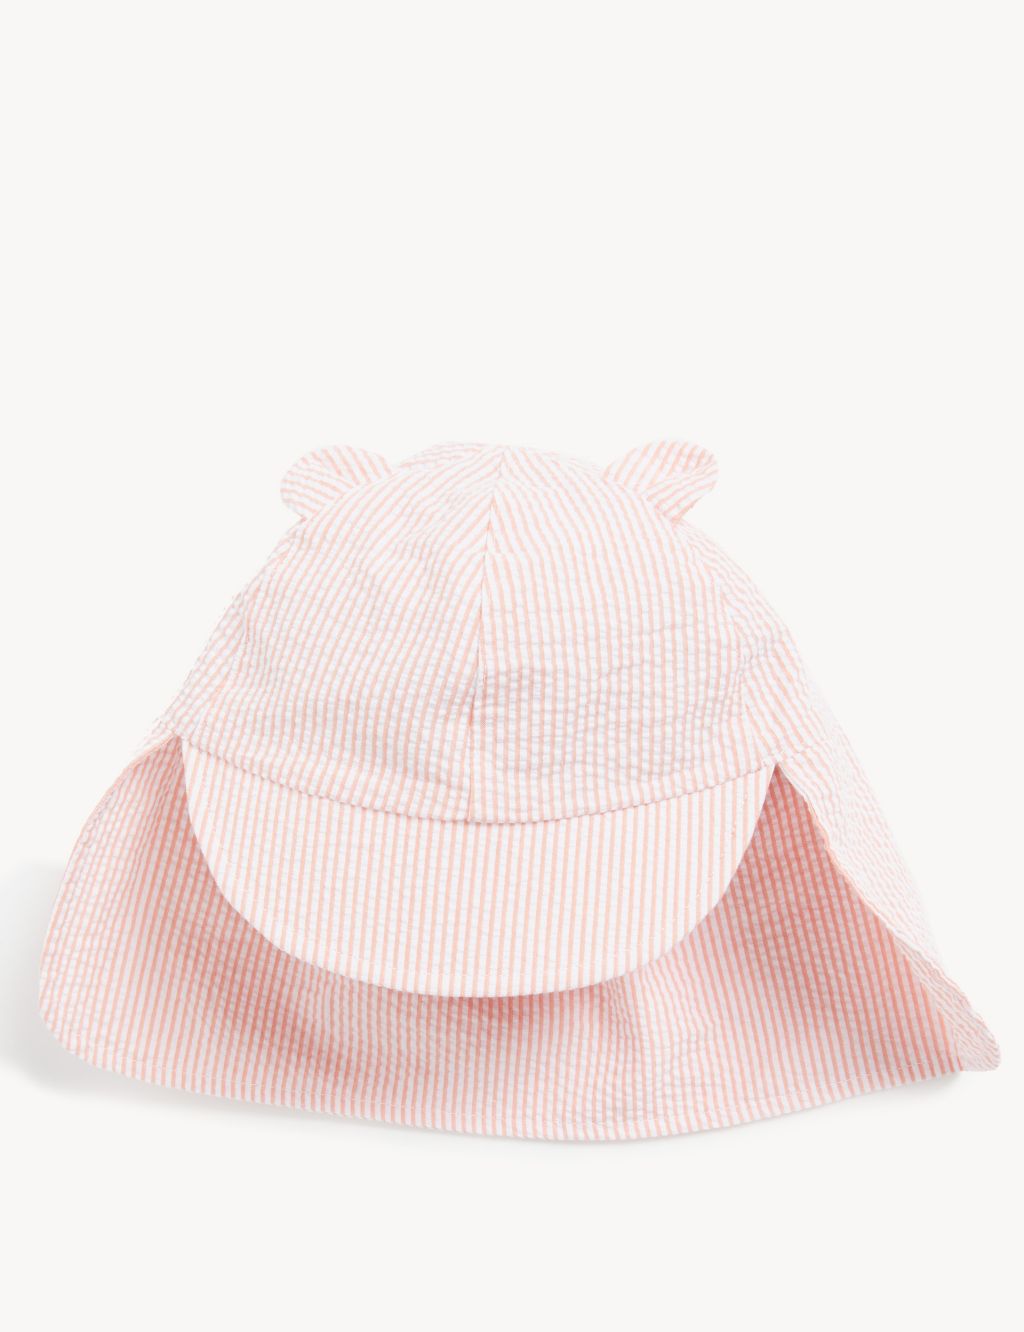 Kids' Pure Cotton Striped Sun Hat (0-6 Yrs) image 1